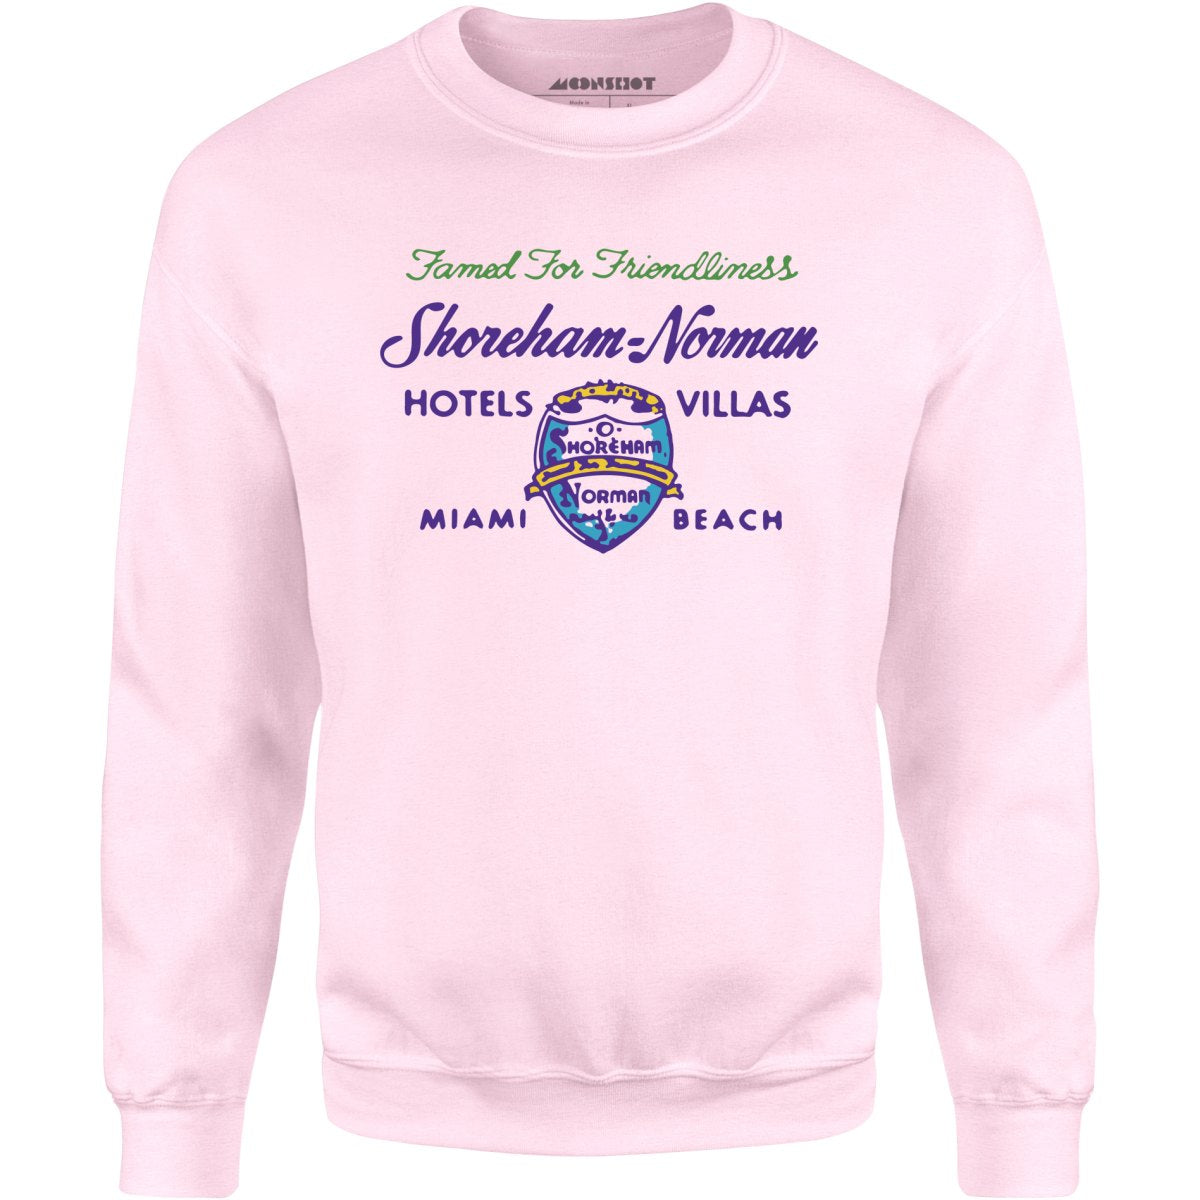 Shoreham Norman Hotels & Villas v2 - Miami, FL - Vintage Hotel - Unisex Sweatshirt